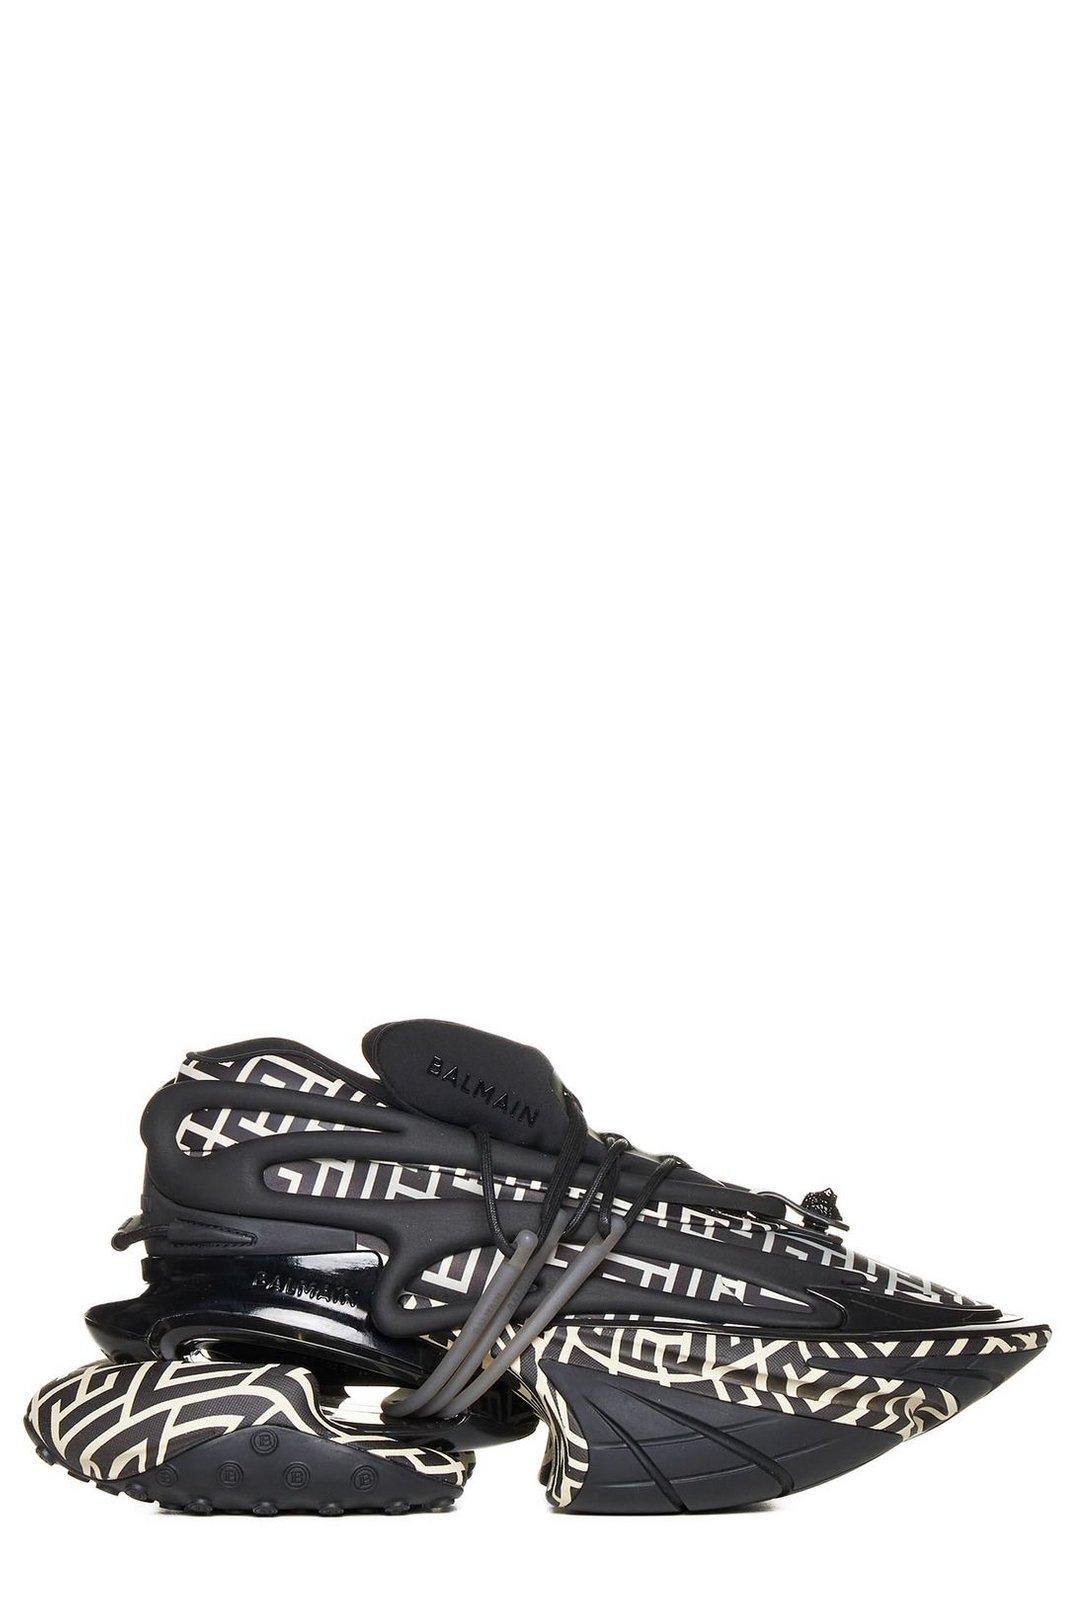 Balmain Unicorn Lace-up Sneakers In Black/white